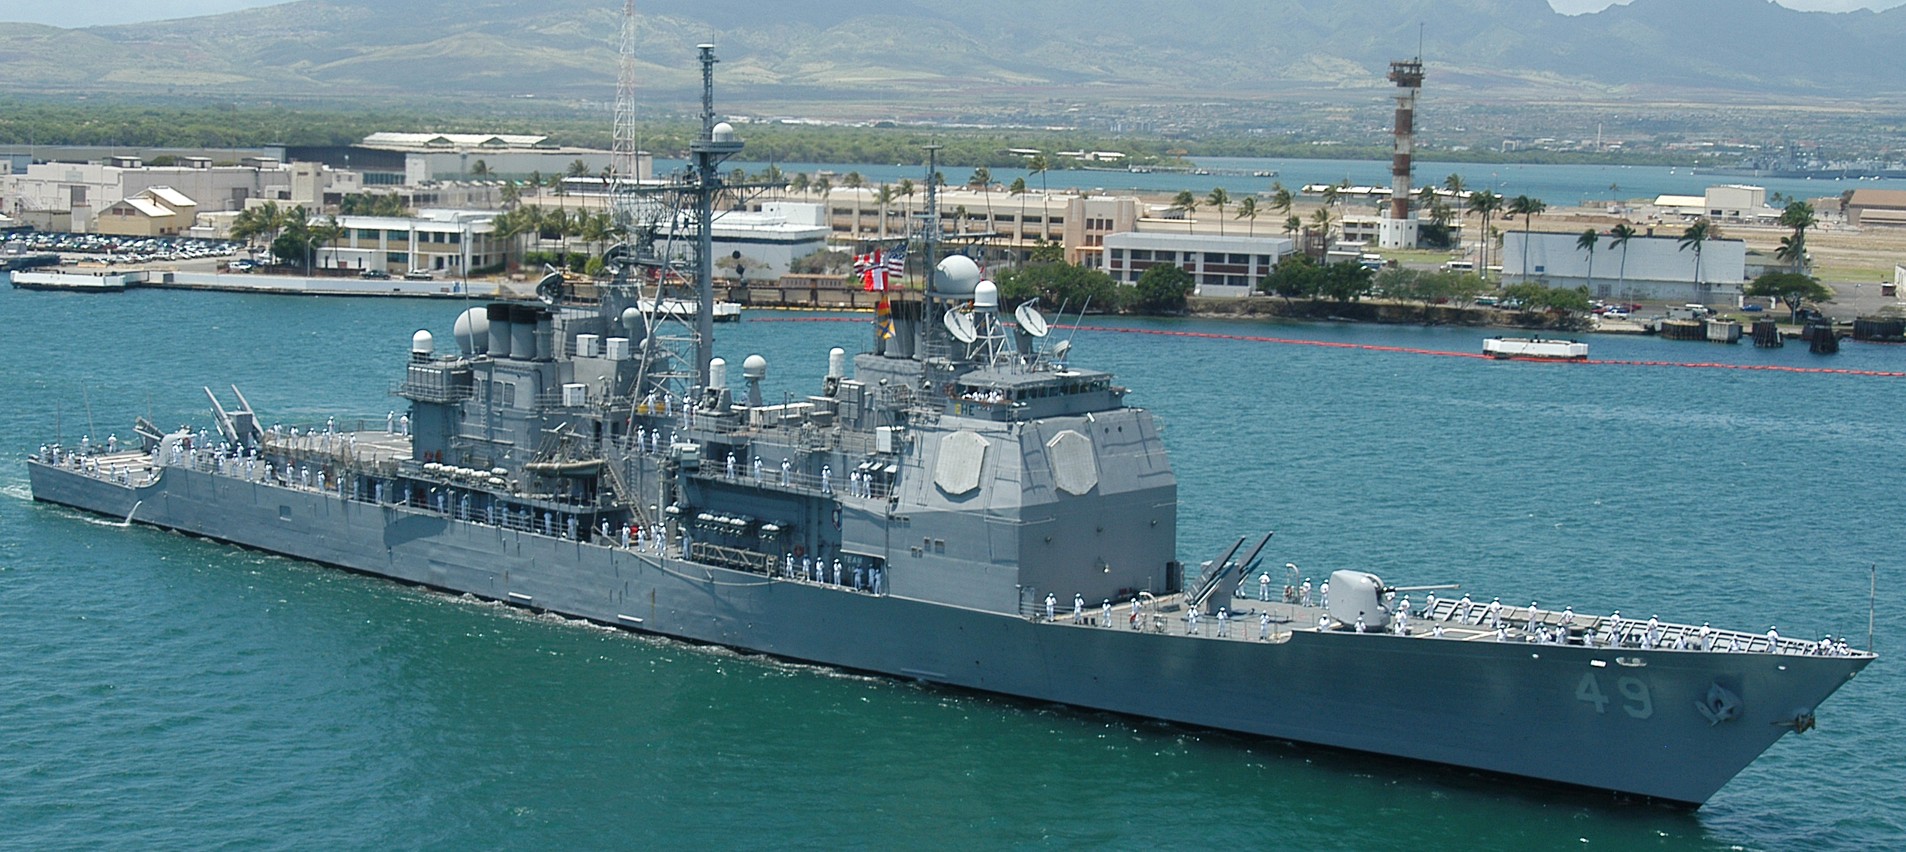 cg-49 uss vincennes ticonderoga class guided missile cruiser aegis us navy pearl harbor hawaii 17